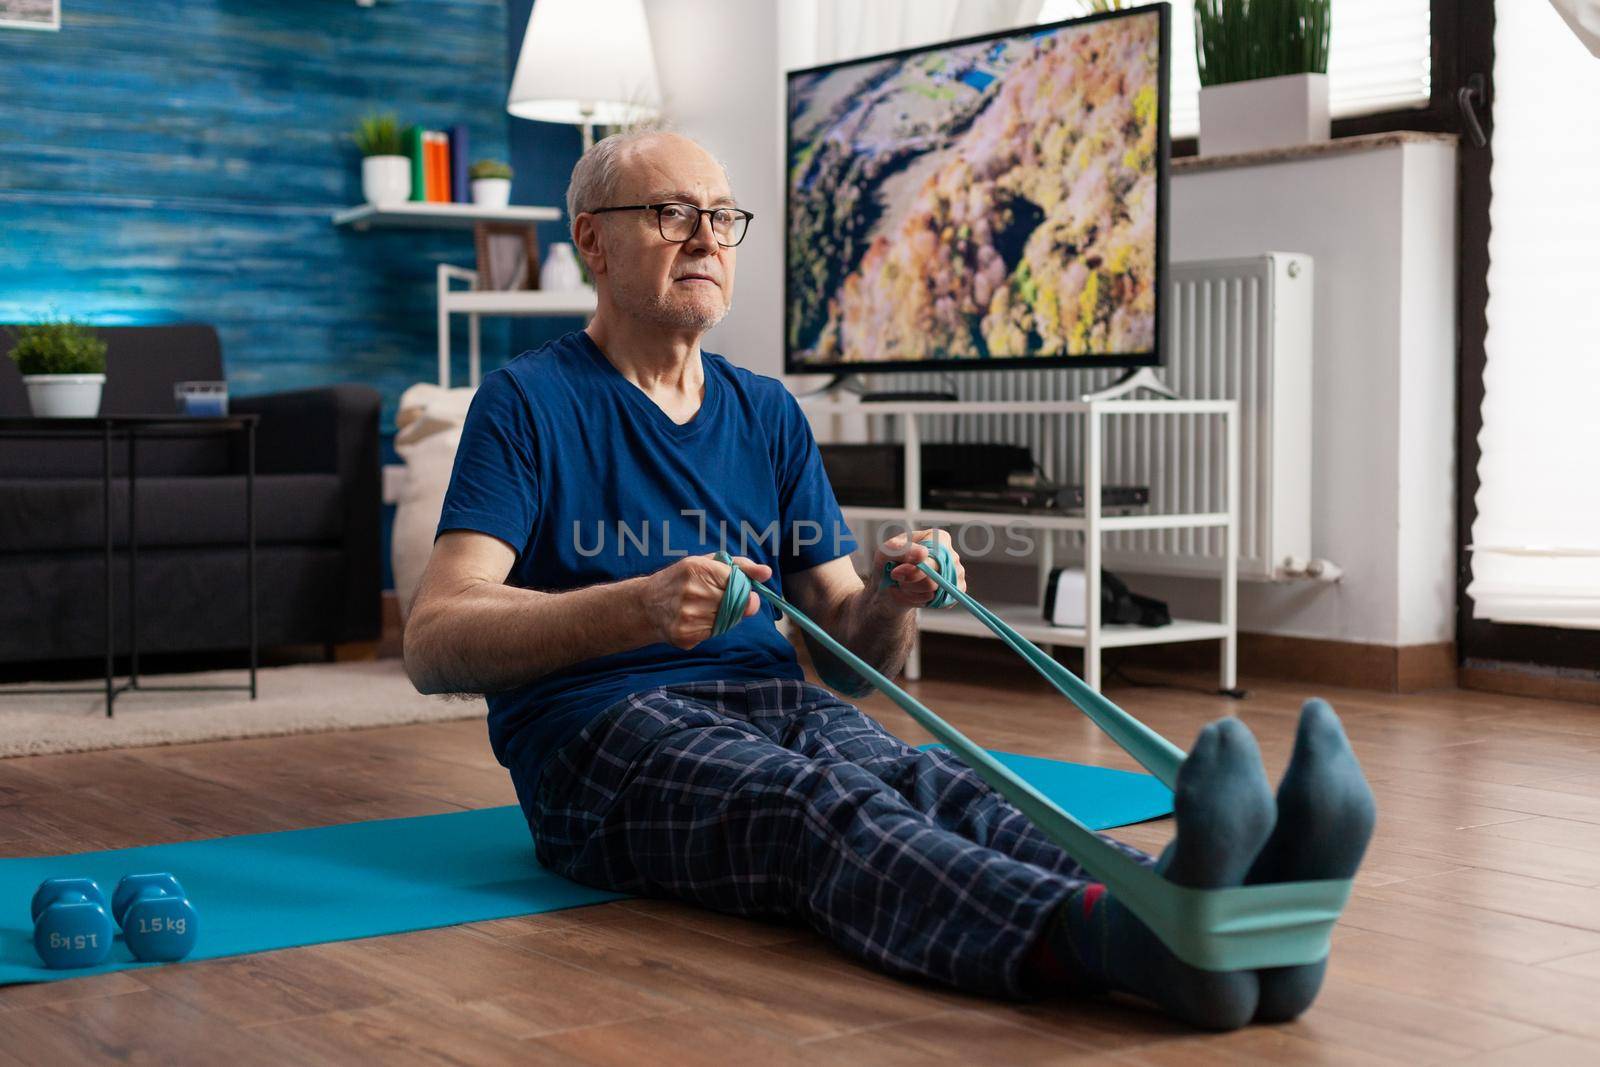 Retirement senior man sitting on yoga mat stretching legs muscles by DCStudio